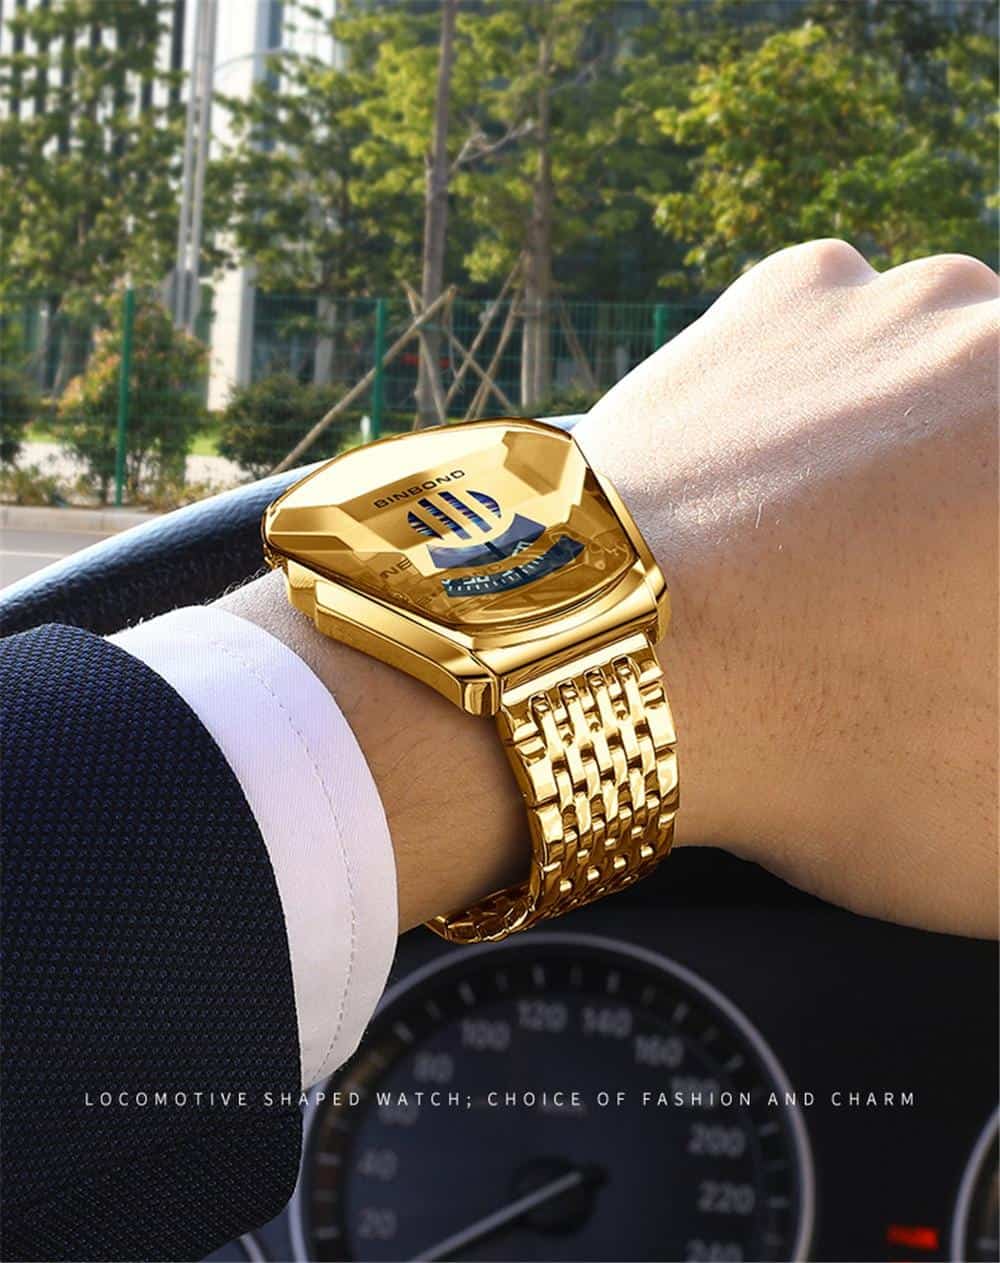 NEW BINBOND Top Brand Luxury Military Fashion Sport Watch Men Gold Wrist Watches Man Clock Casual Chronograph Wristwatch